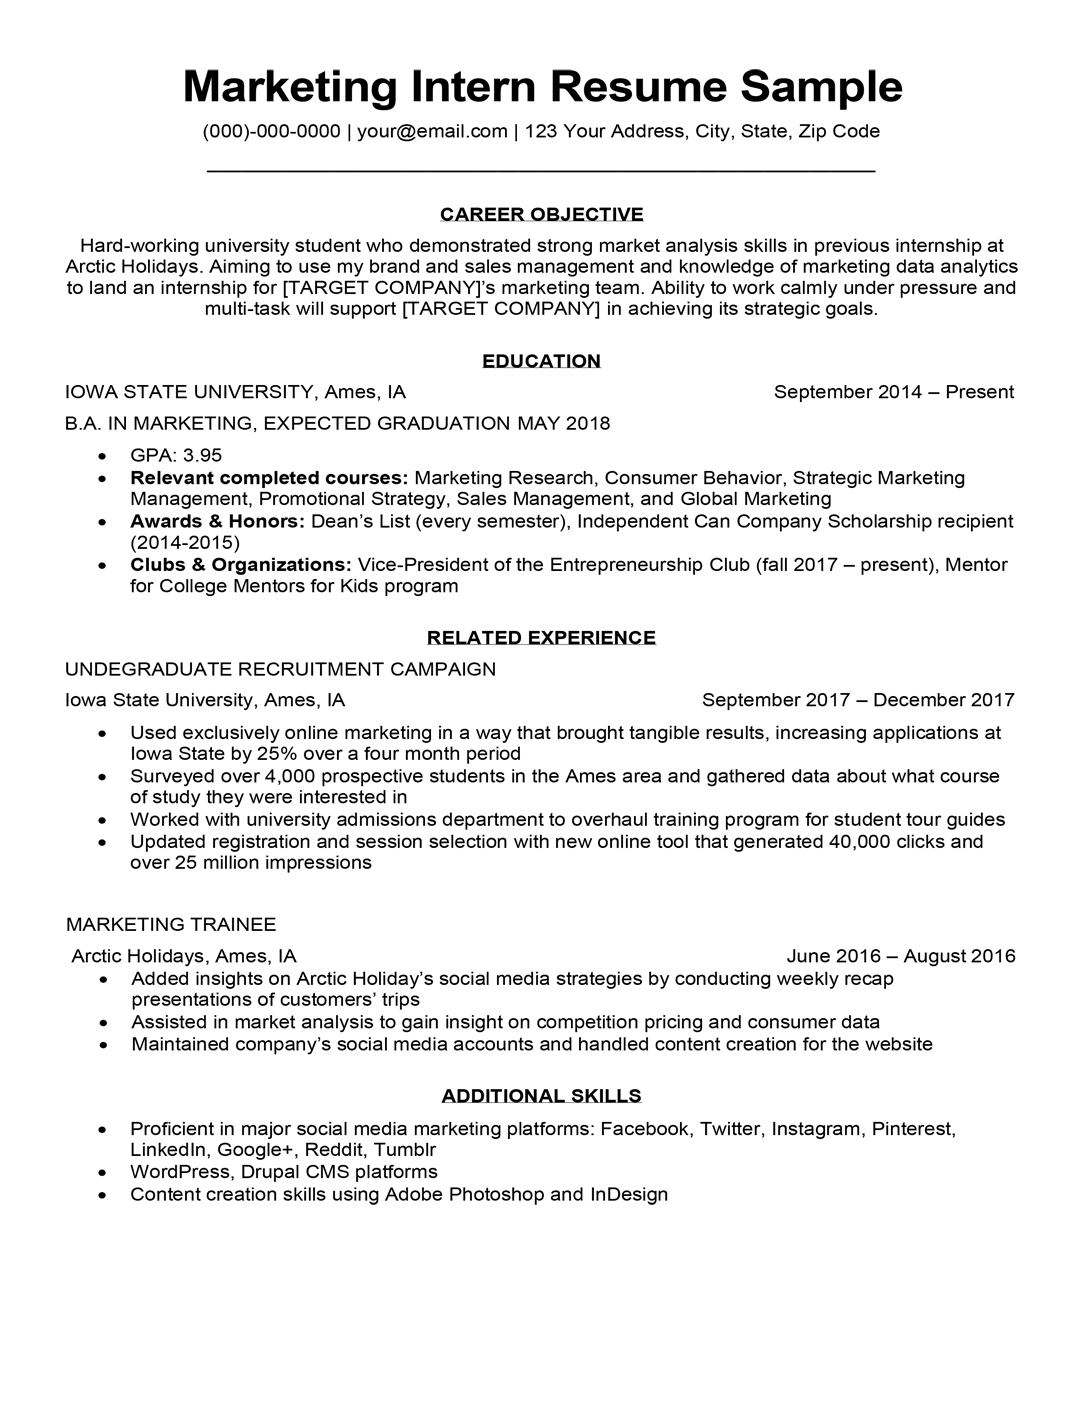 Custom resume writing the objective